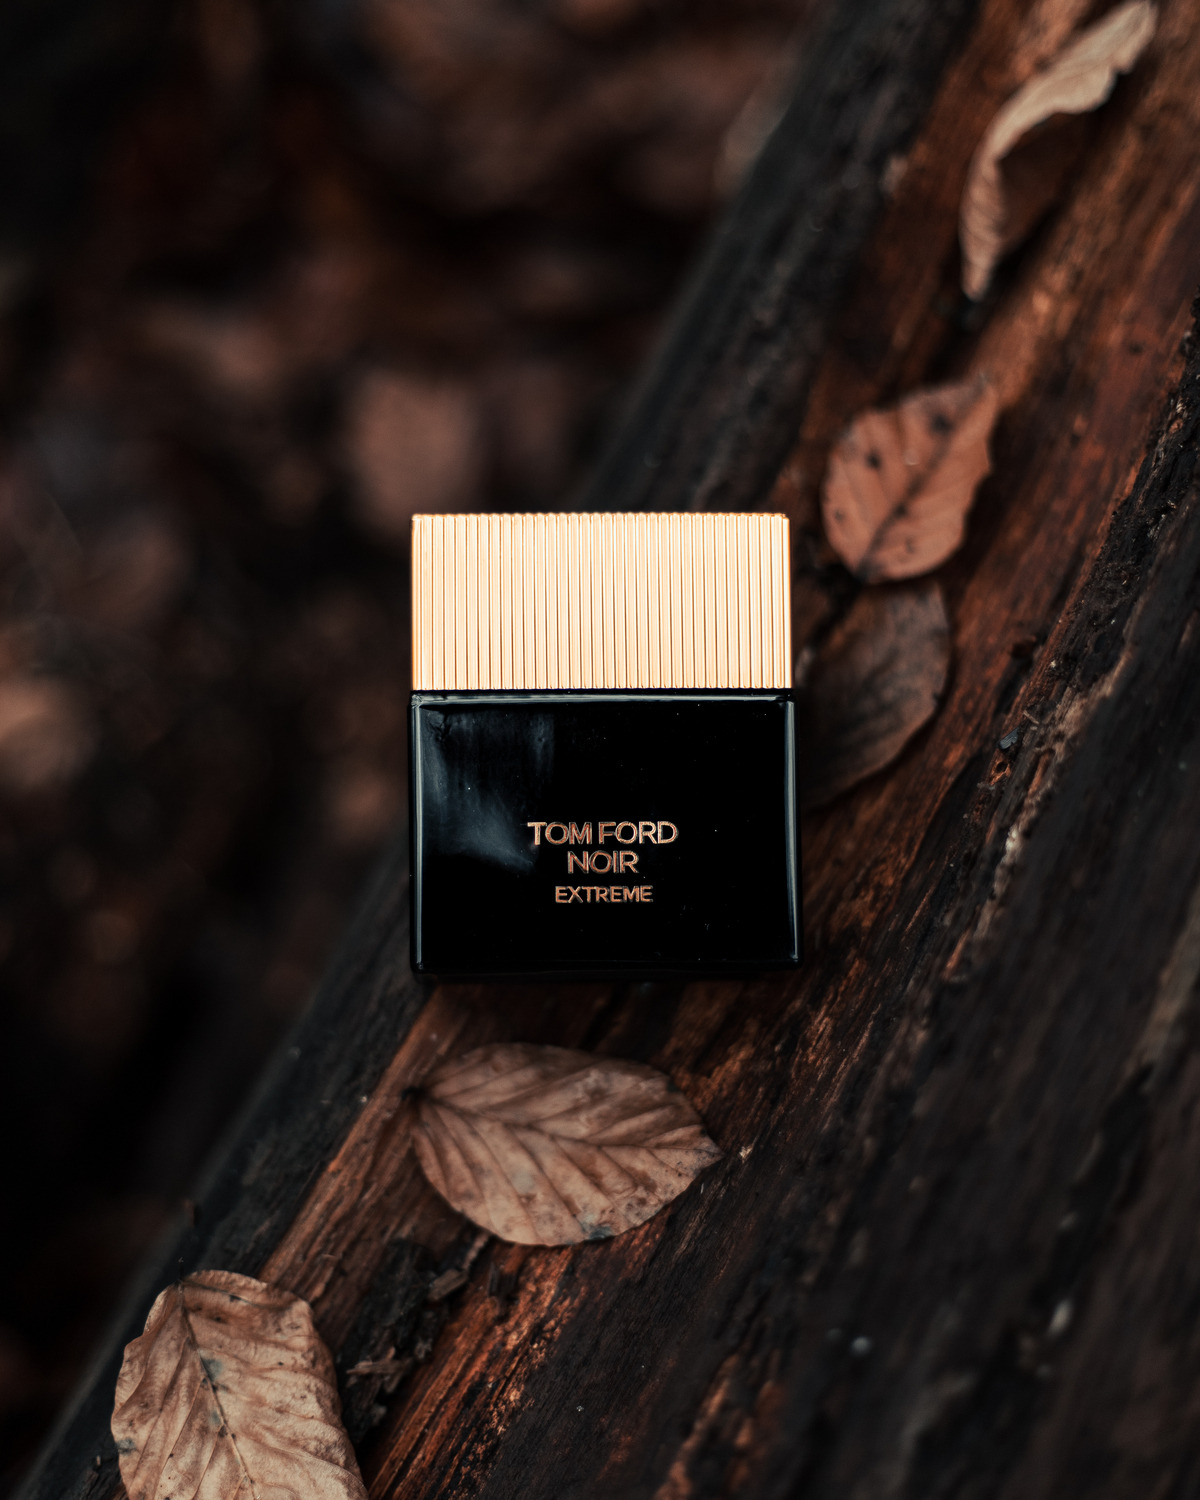 Tom Ford Noir Extreme  Honest Fragrance Review - Suparfum